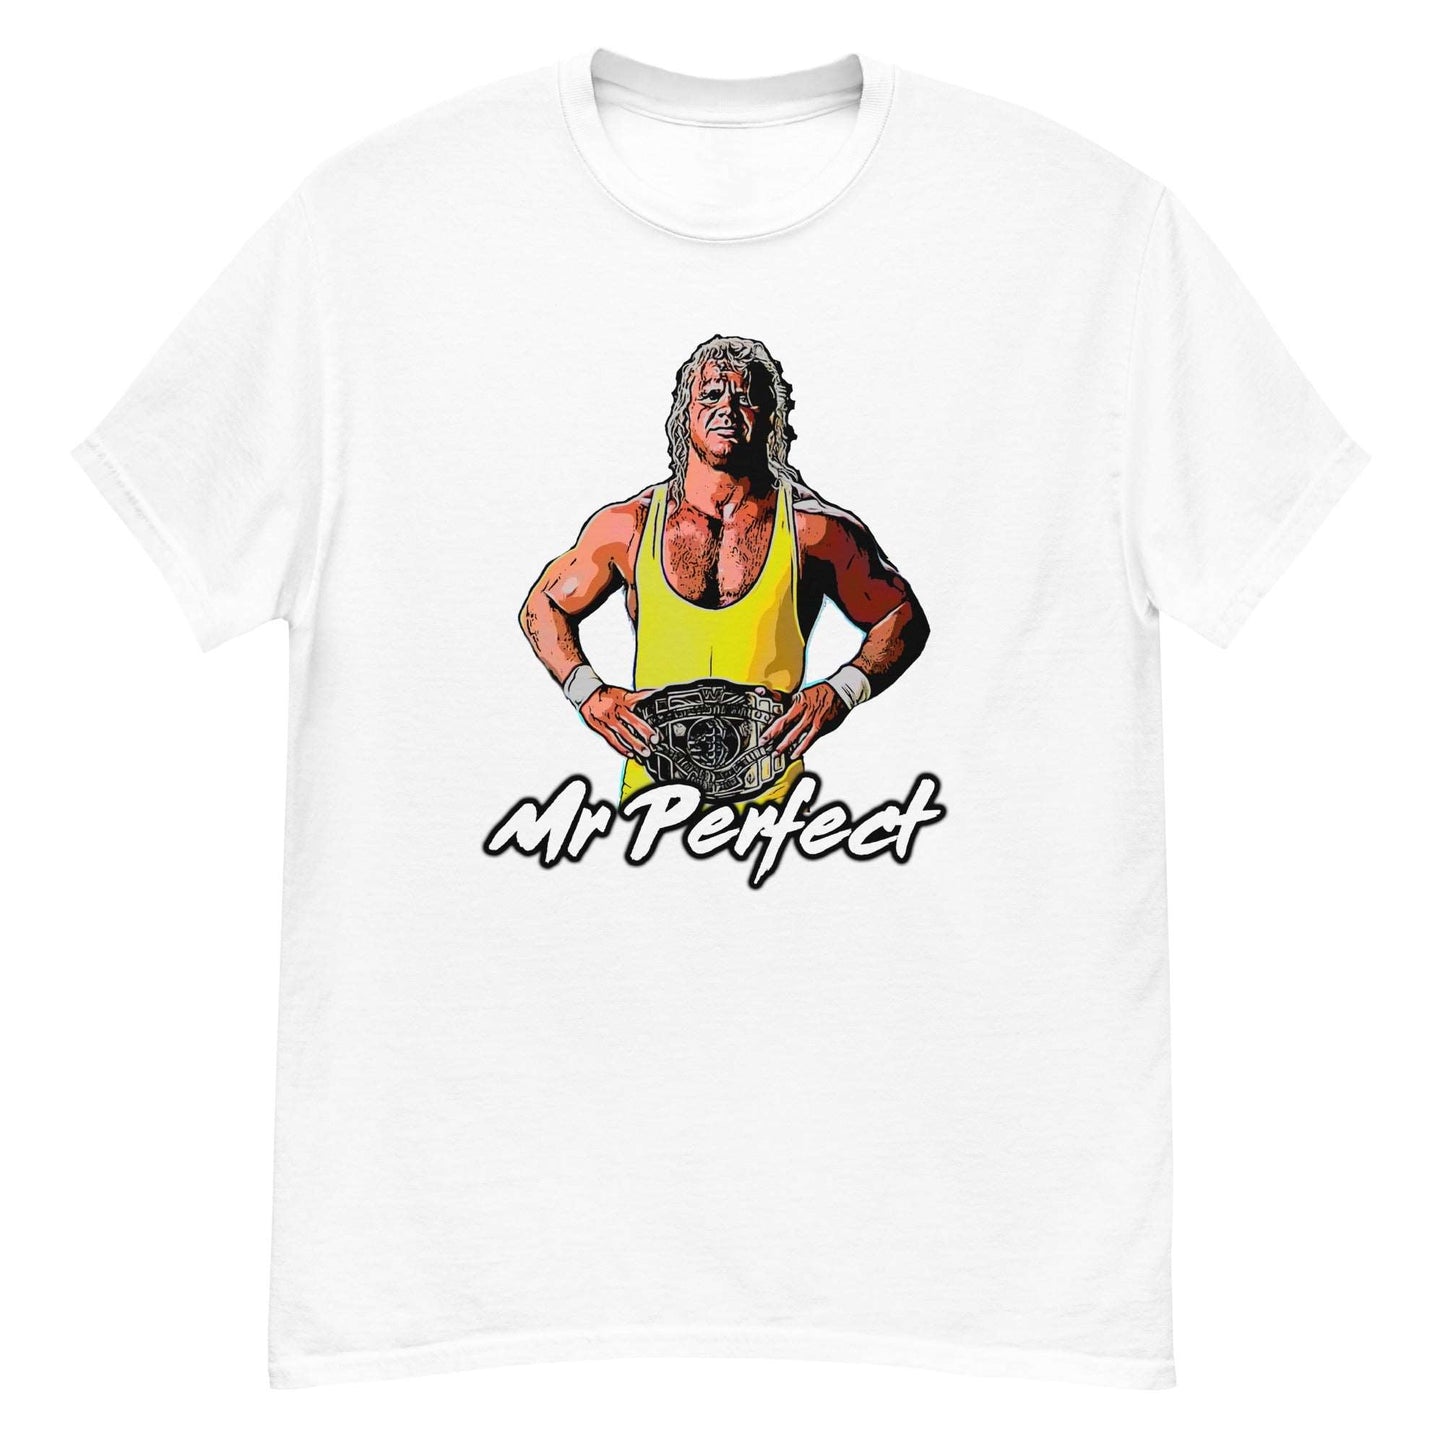 Mr. Perfect 80s Wrestling Tee - Classic Wrestling T-Shirt - thenightmareinc